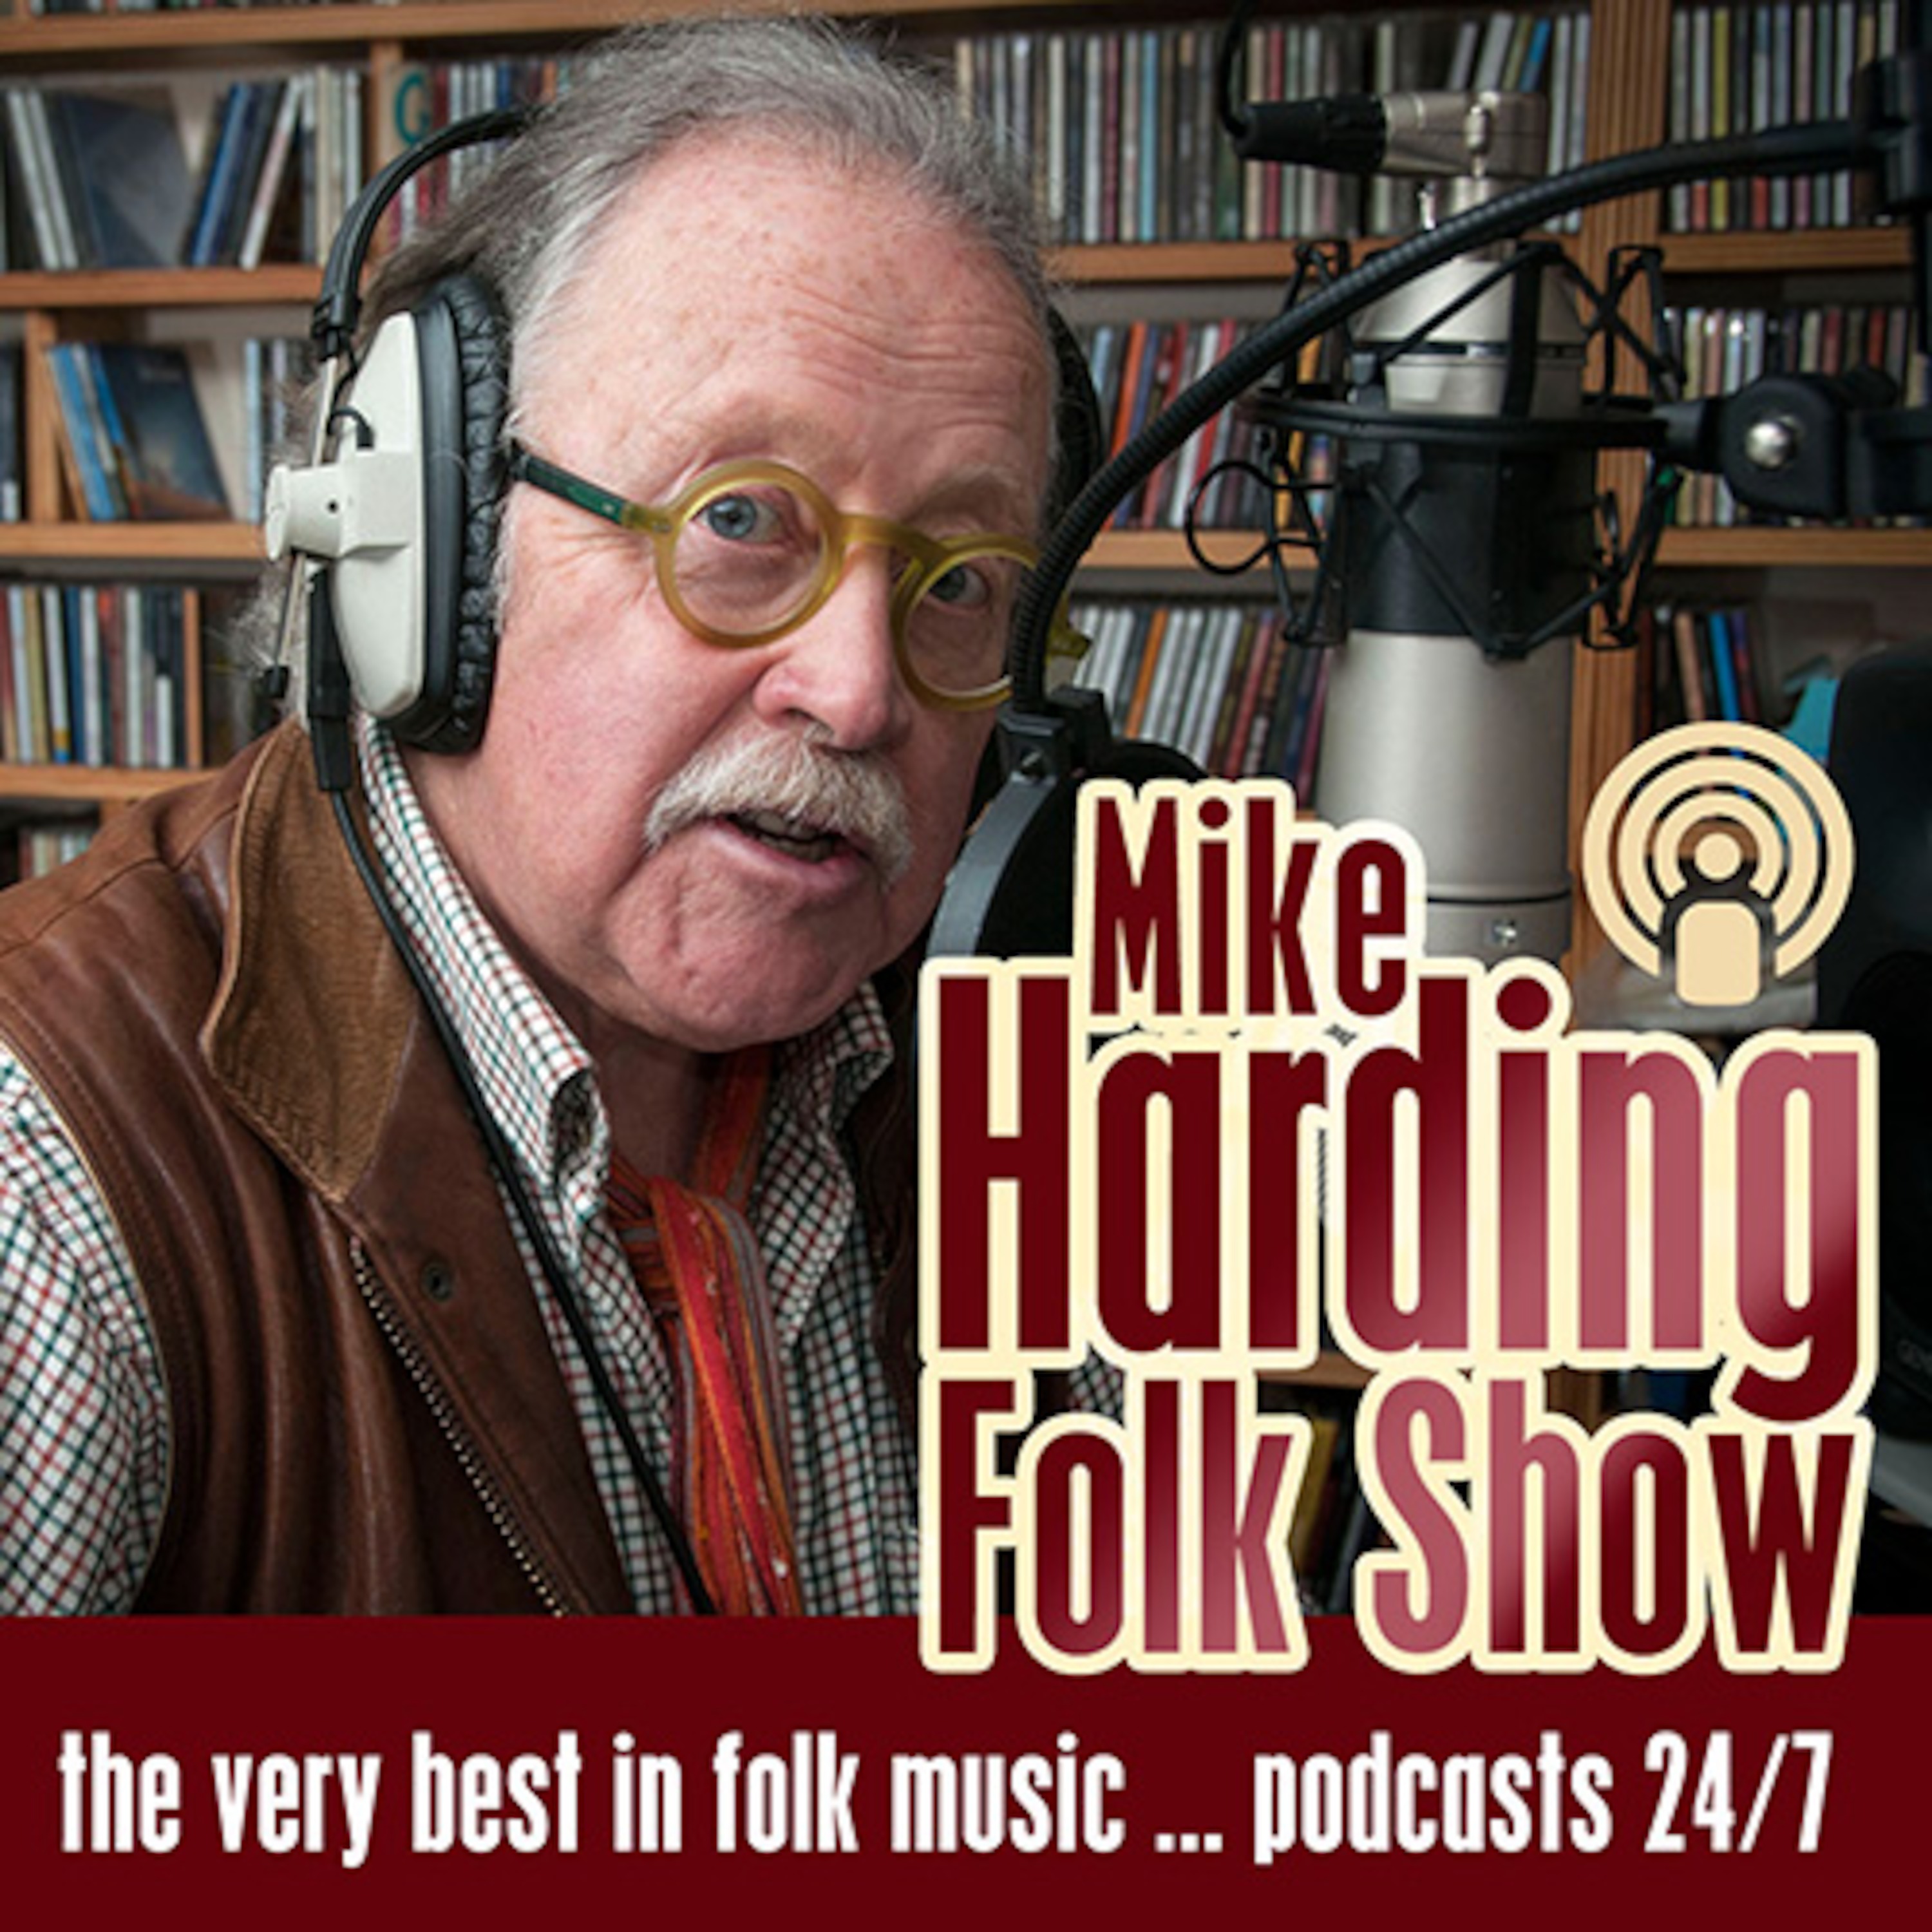 Mike Harding Folk Show 207